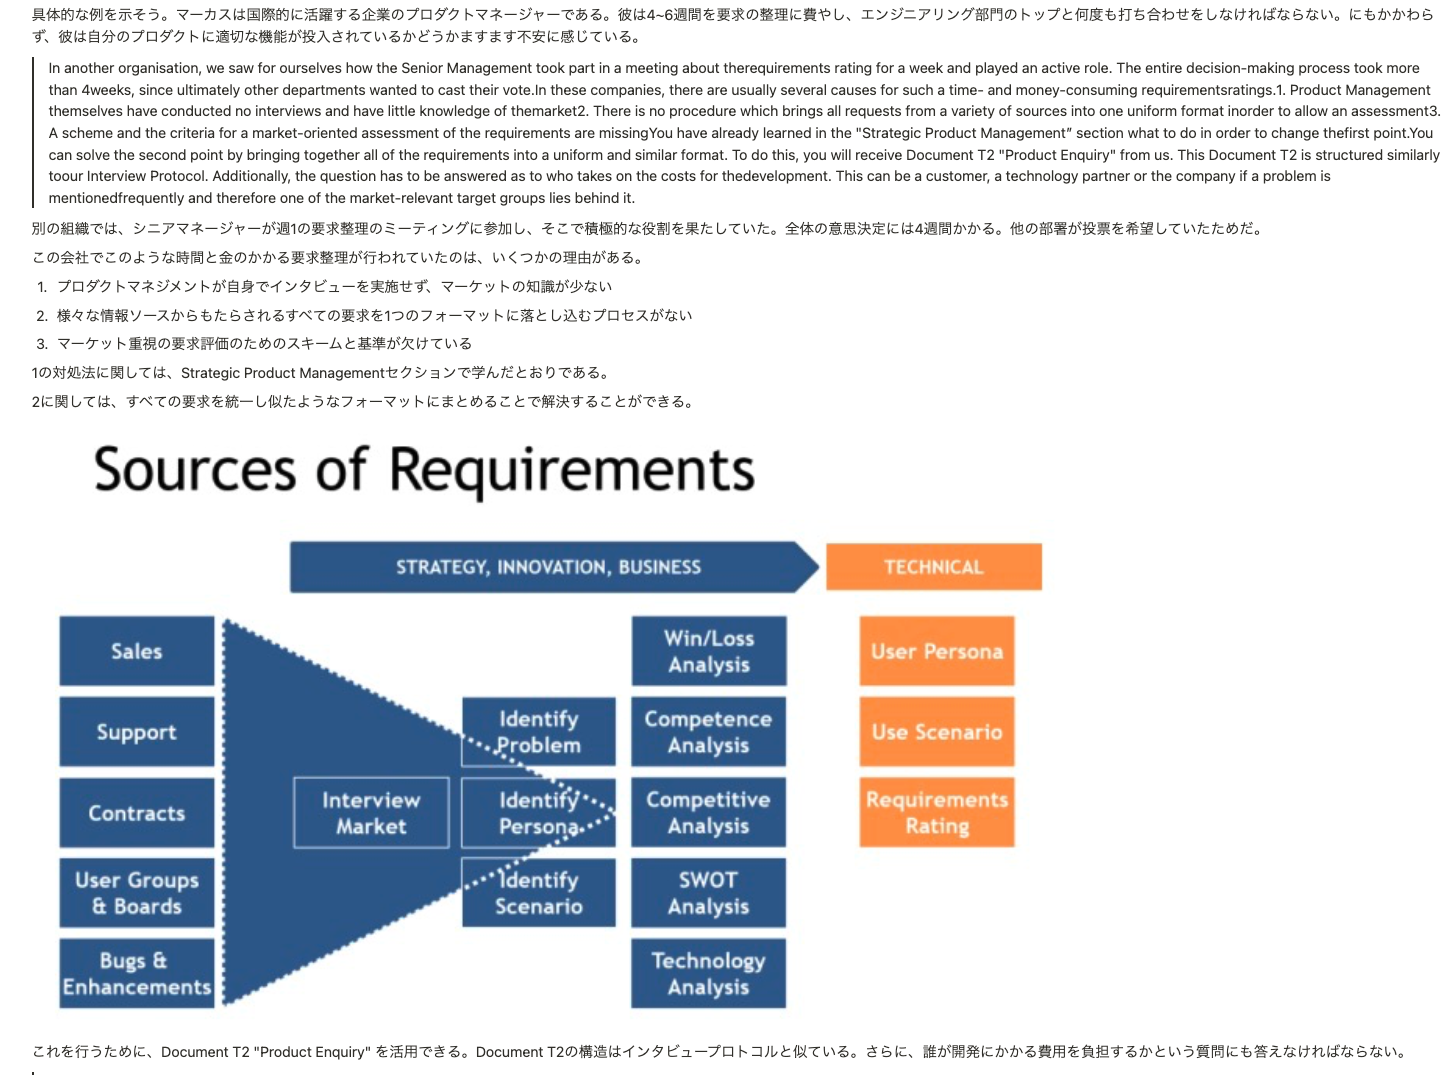 Technical Phaseの要望レーティングの和訳のキャプチャ。文章と図「Sources of Requirements」が示されている。